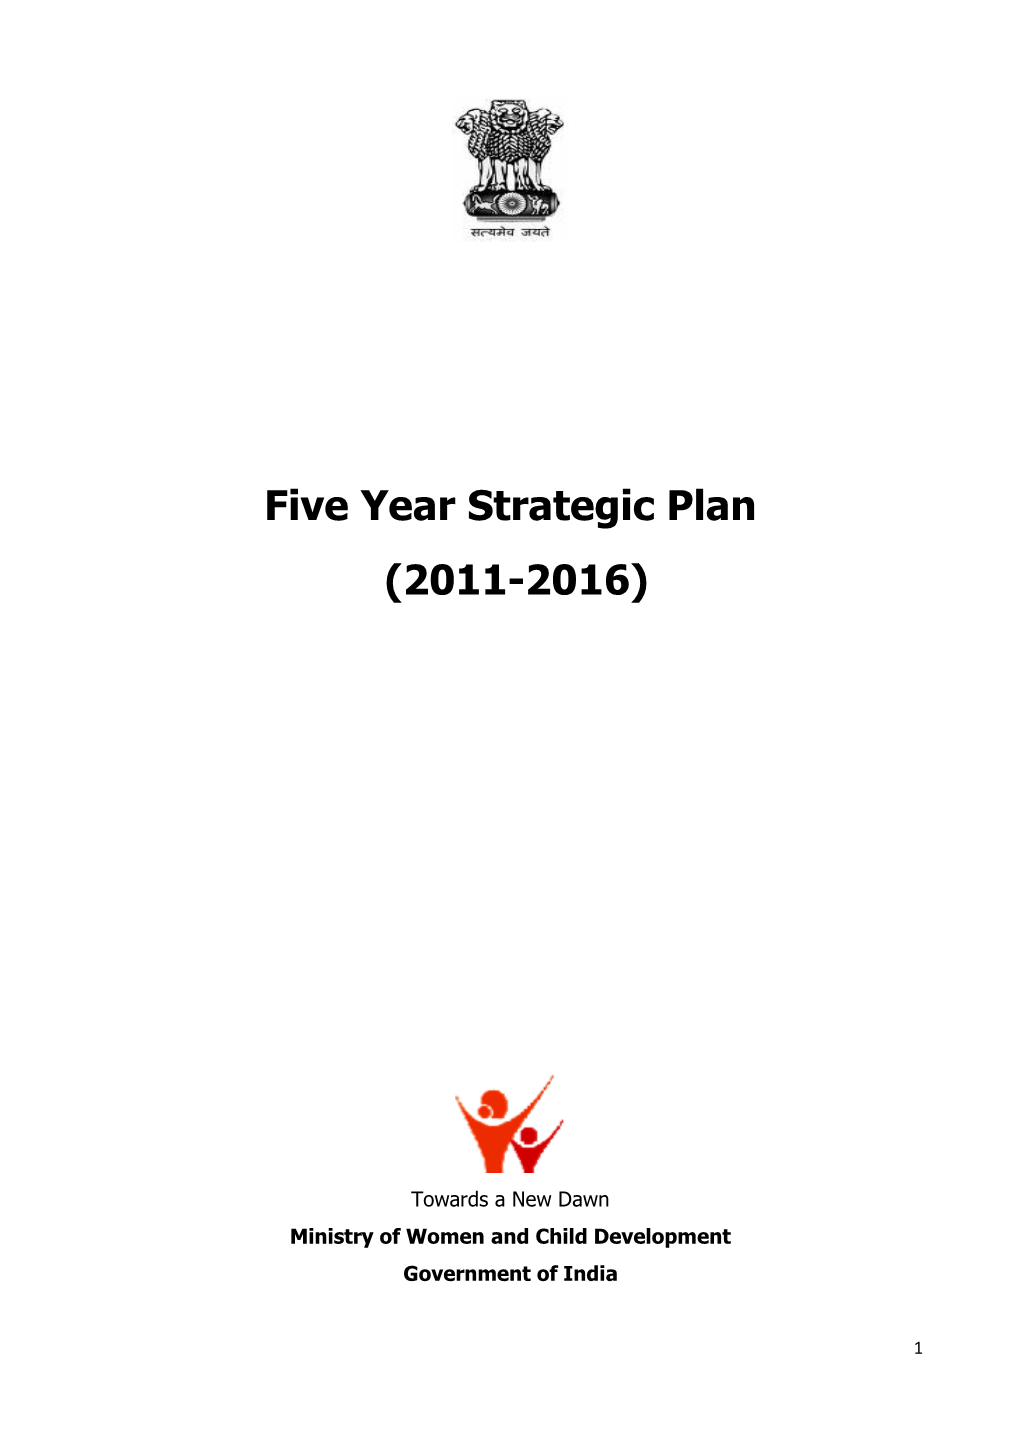 Five Year Strategic Plan (2011-2016)